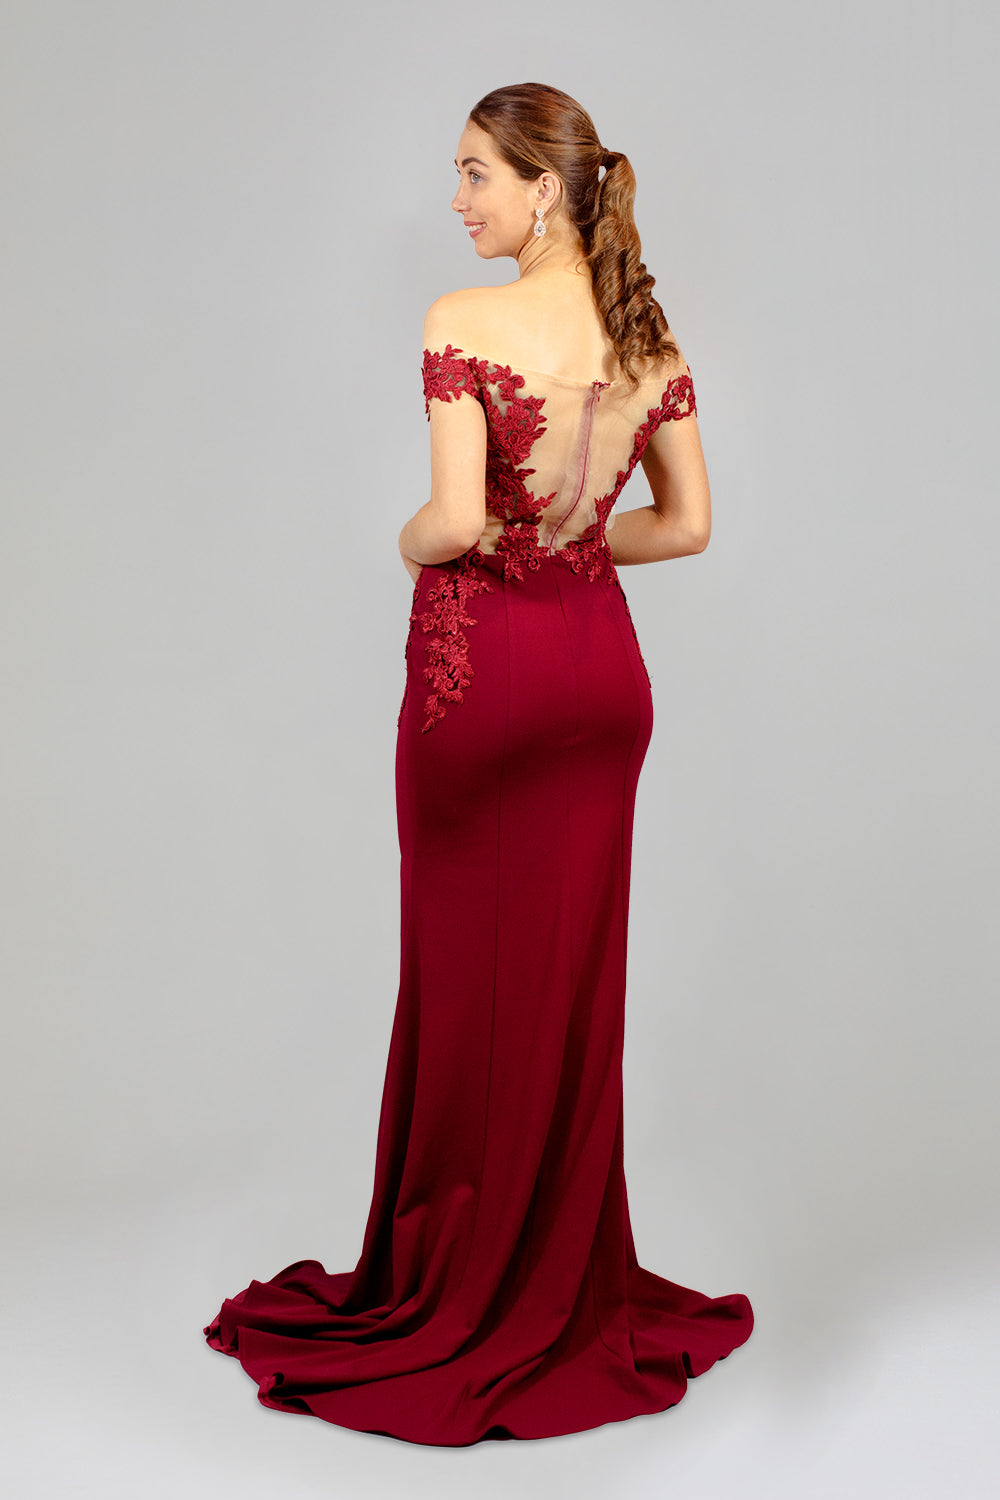 red-wedding-dress-mermaid-style-custom-made-envious-bridal-formal